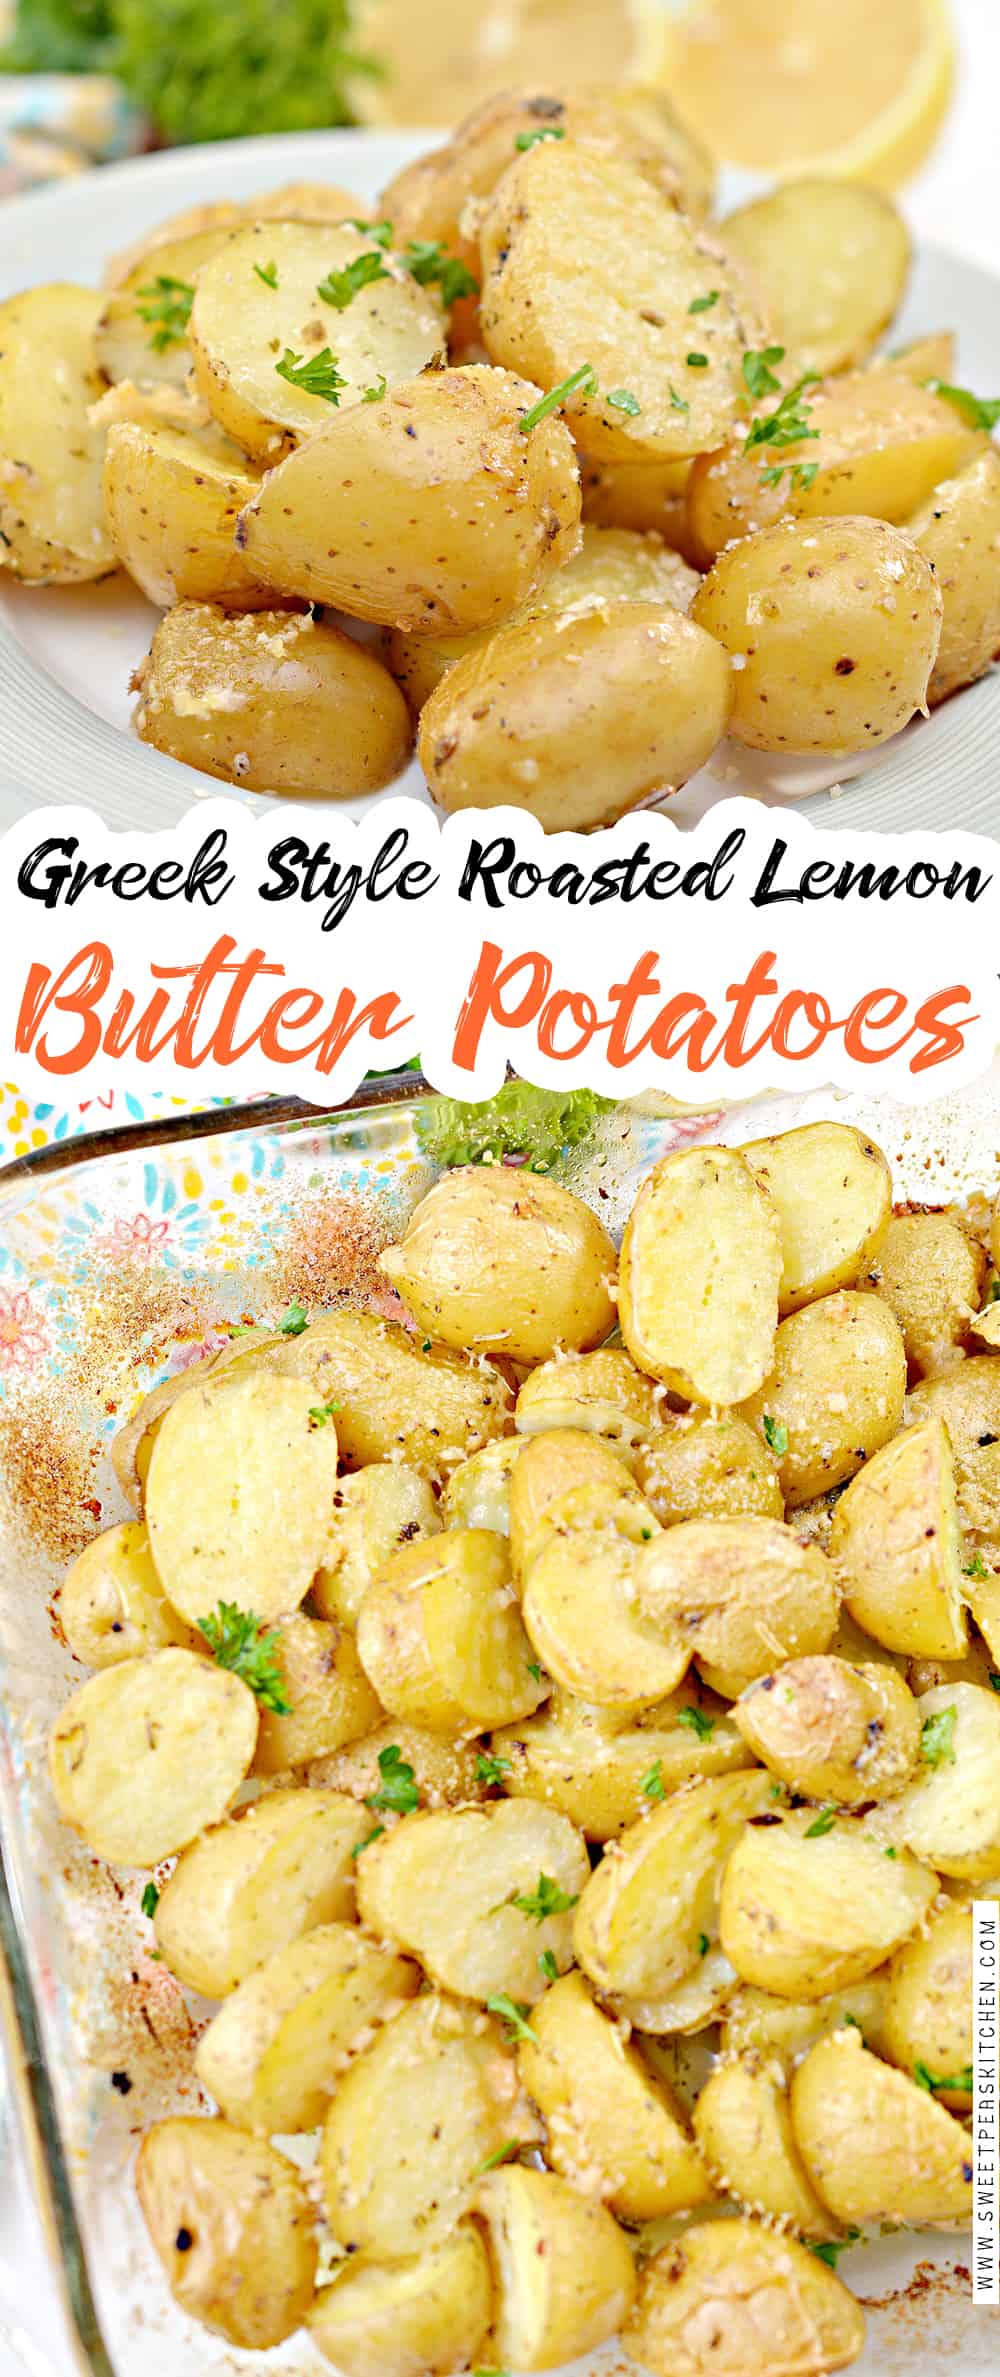 Greek Style Roasted Lemon Butter Potatoes on pinterest